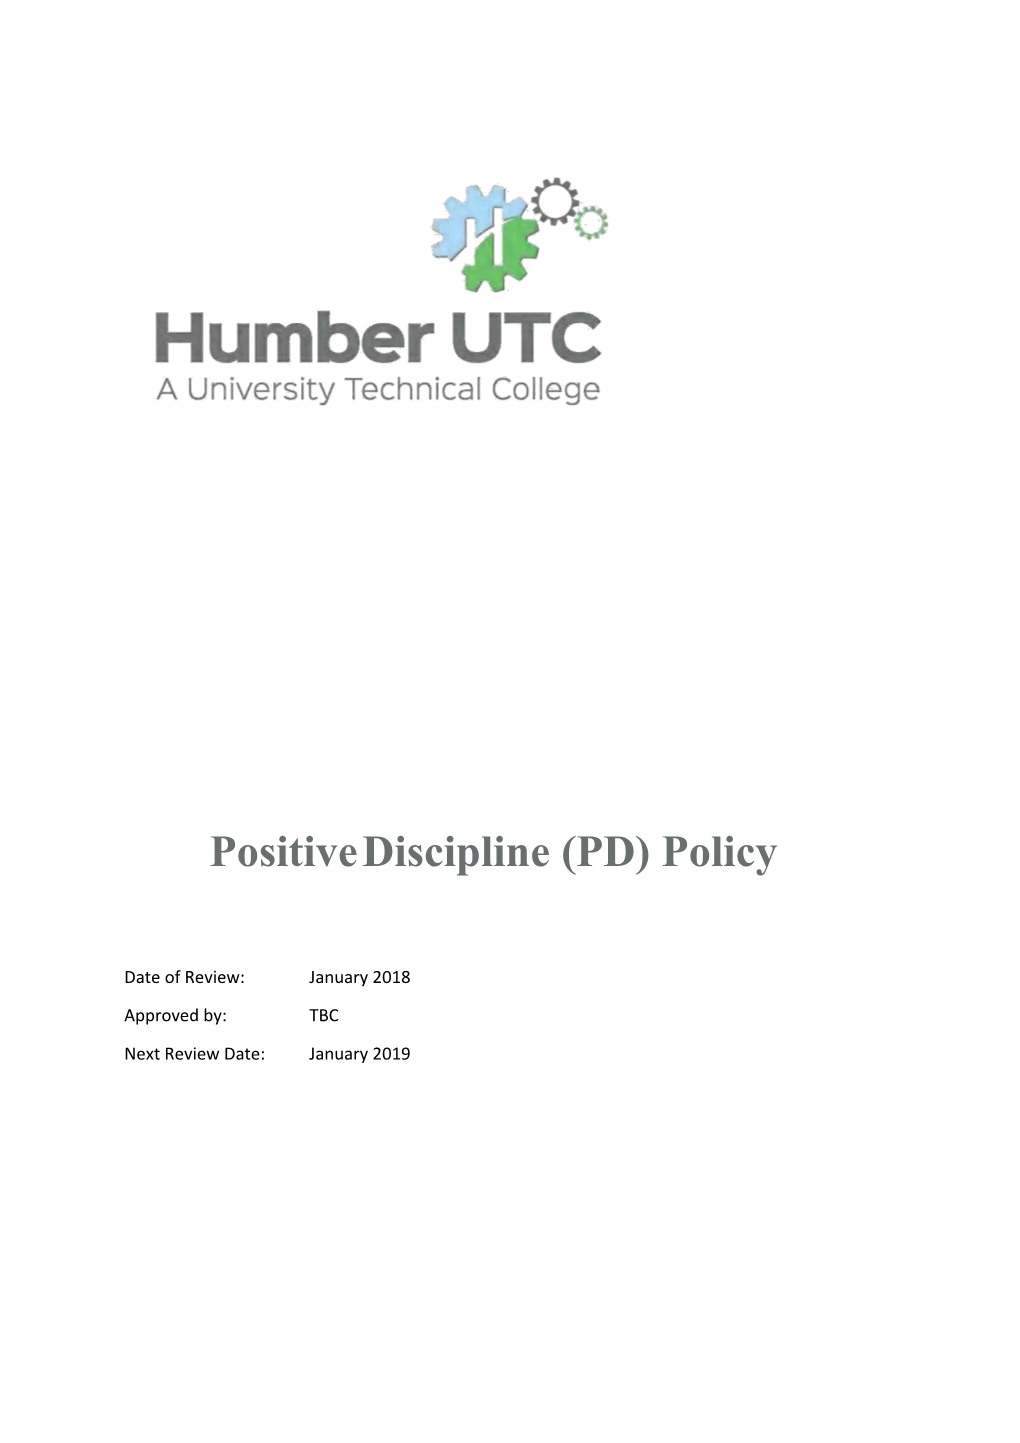 Positivediscipline (PD) Policy